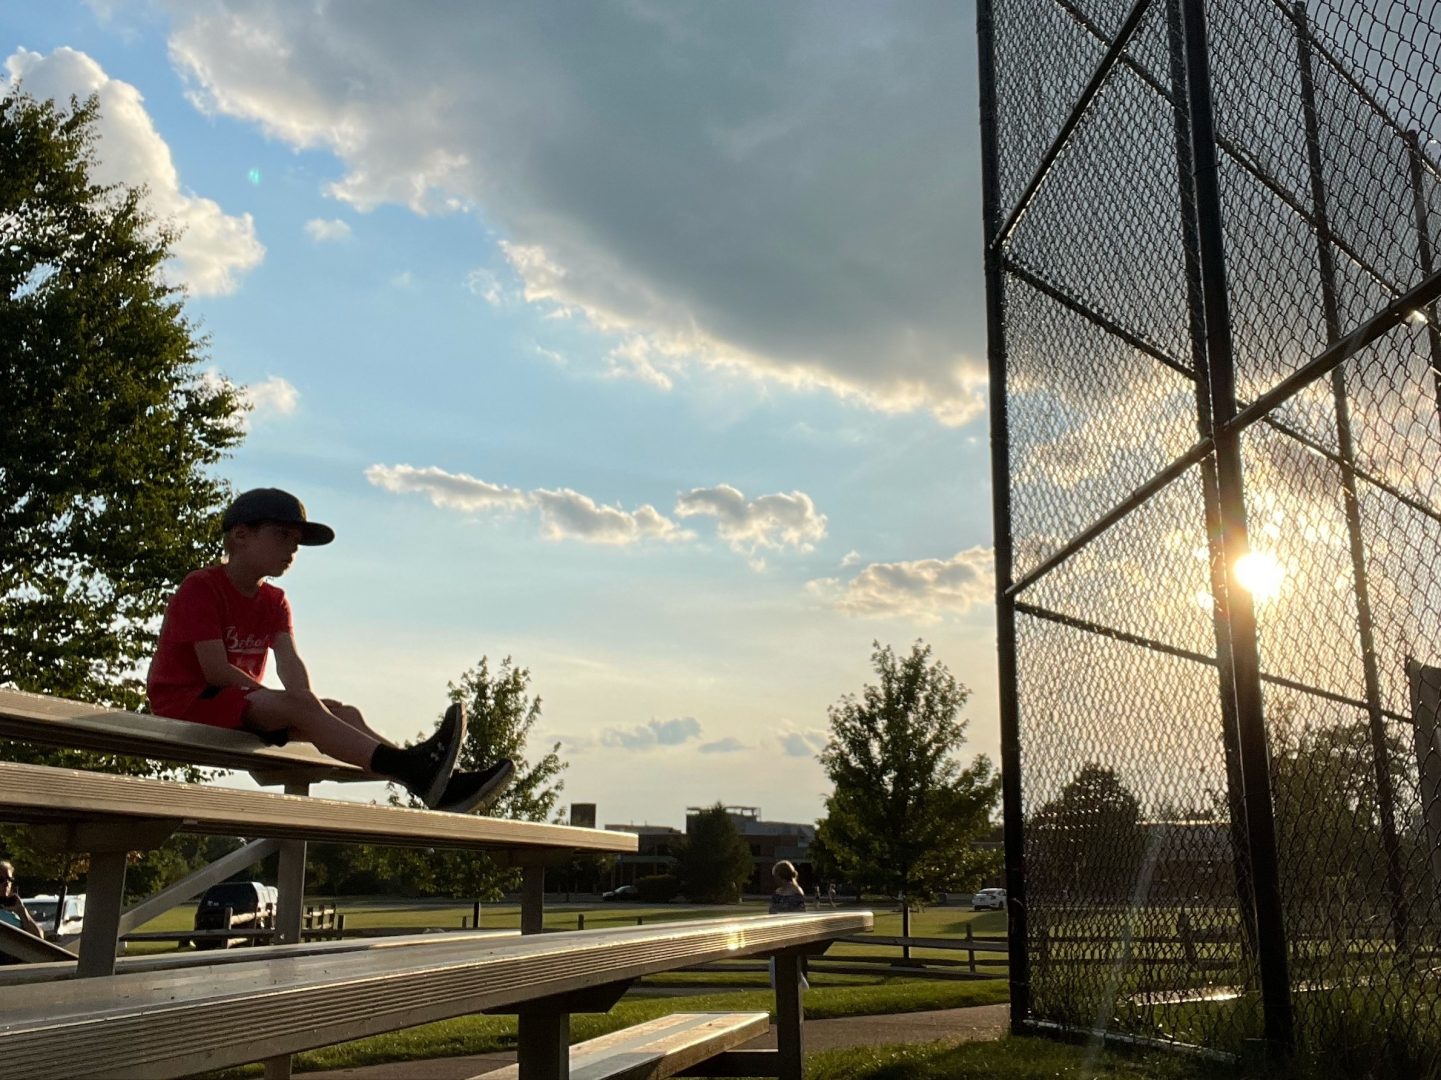 A young boy watches a high-school level municipal league baseball game as the sun sets in Allison Park, Pennsylvania, Thursday, June 24, 2021.